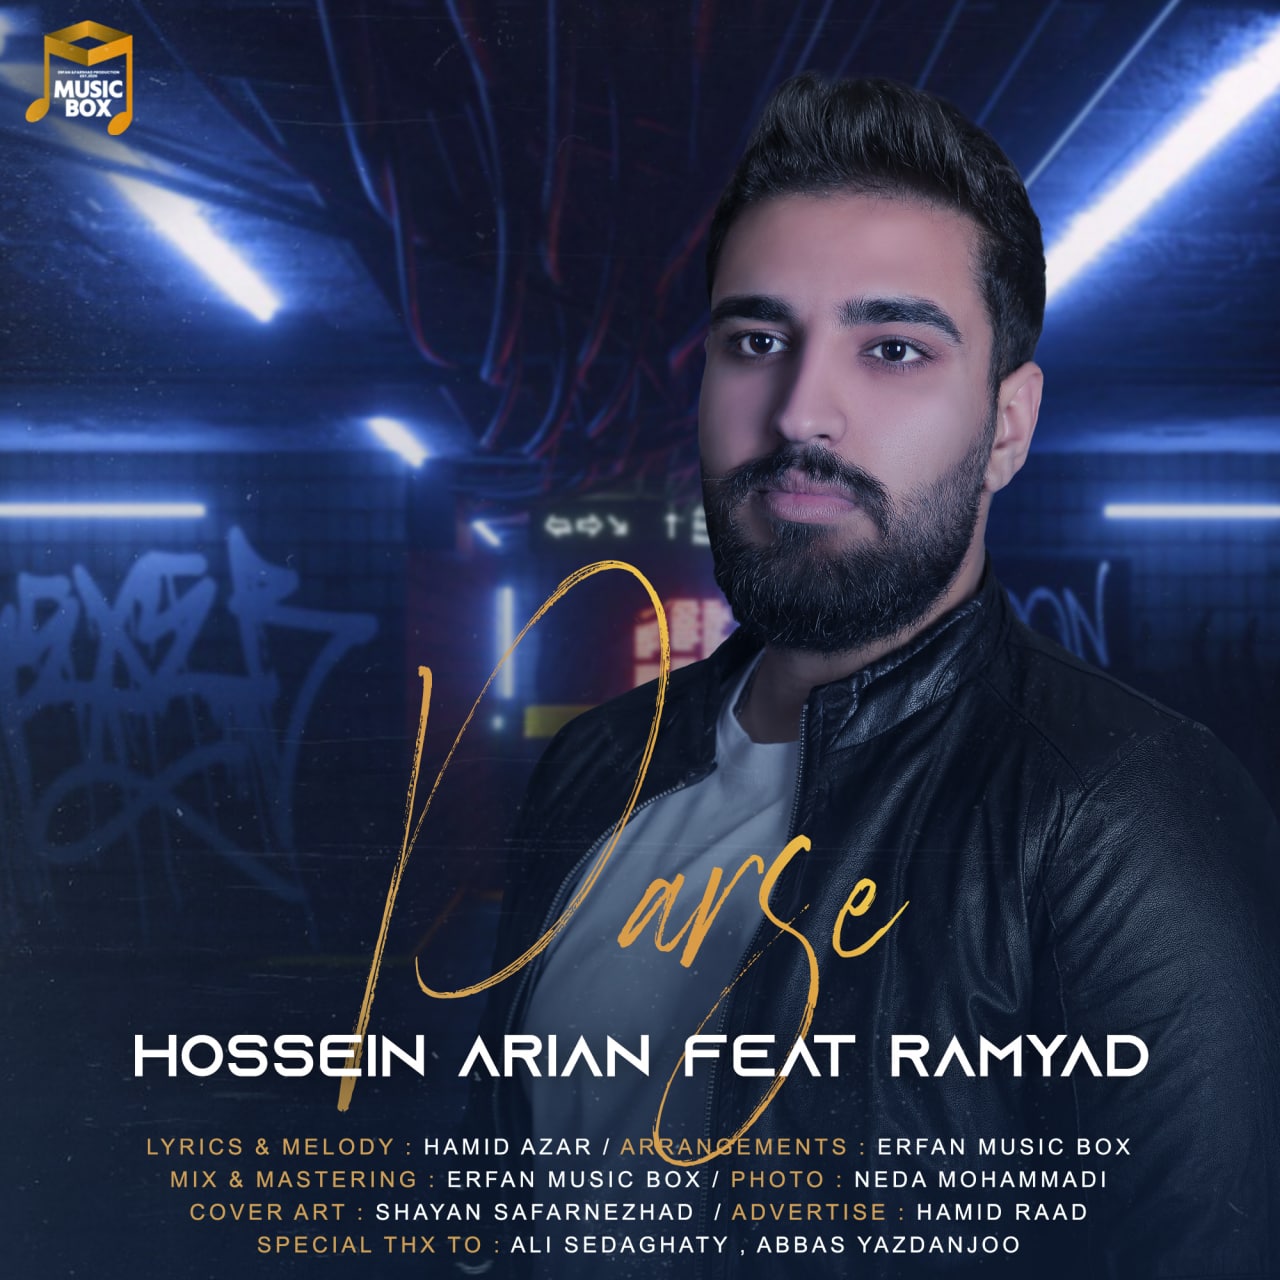 Hossein Arian Ft Ramyad – Parseh